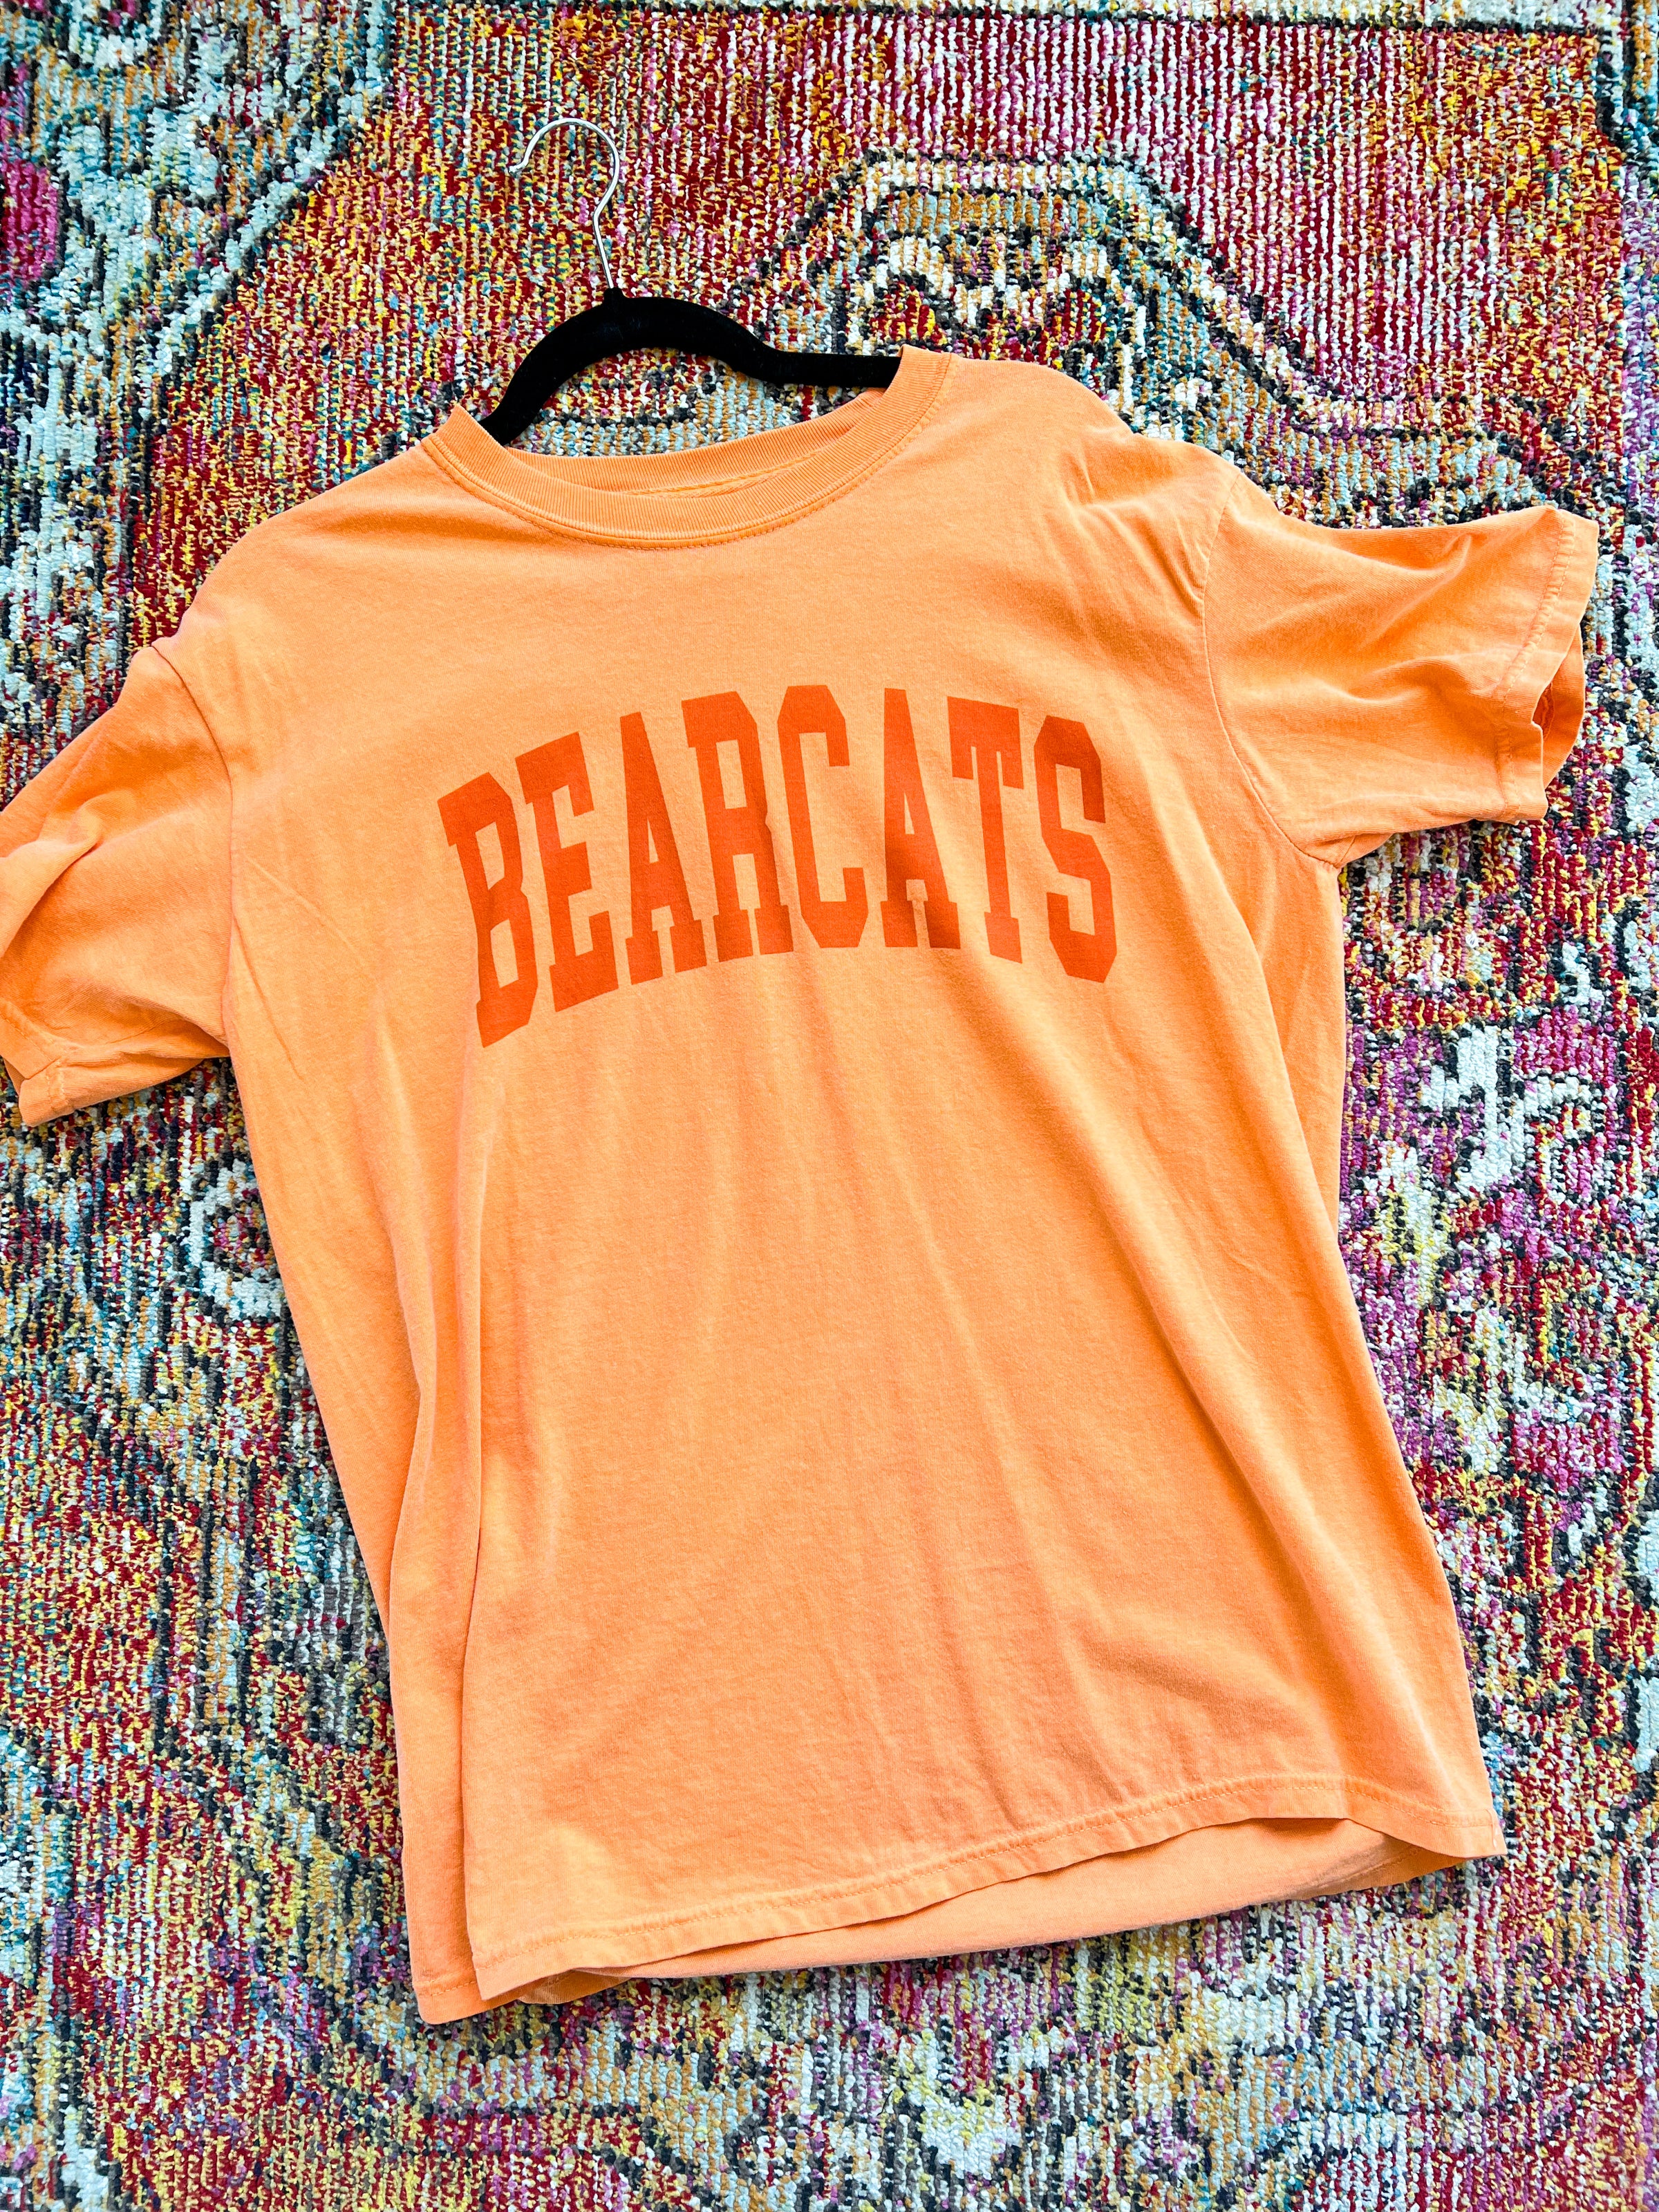 Bearcats Comfort Colors T-Shirt